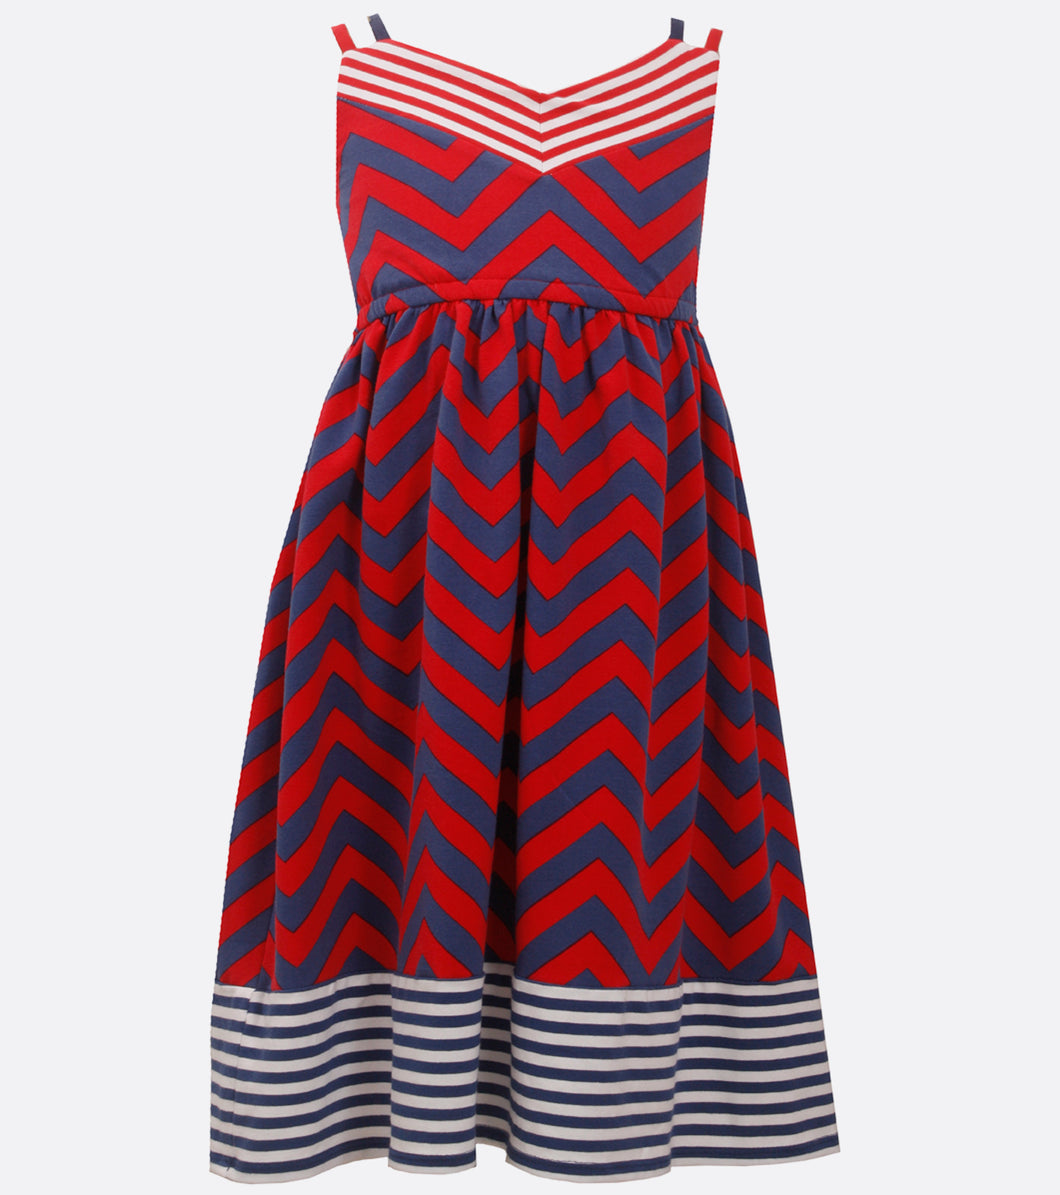 Bonnie Jean red white and blue stripe dress